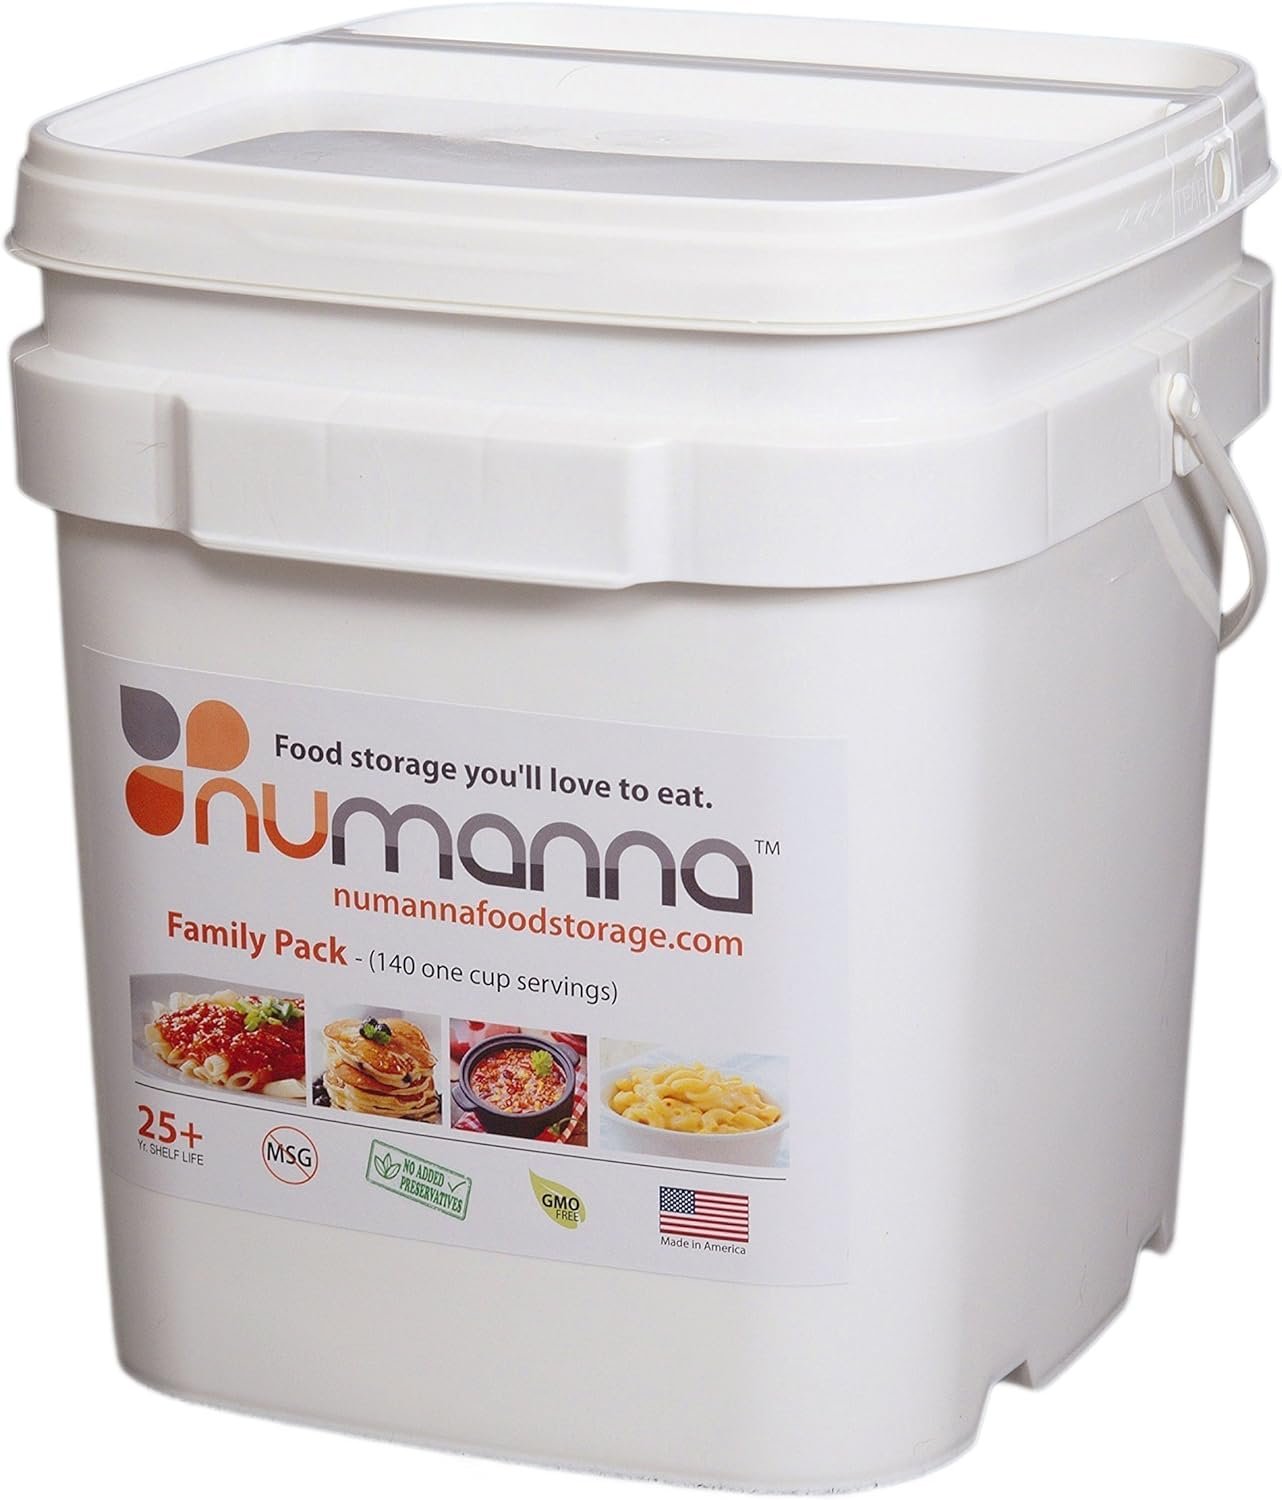 NuManna Emergency Survival Food Storage Kit Review